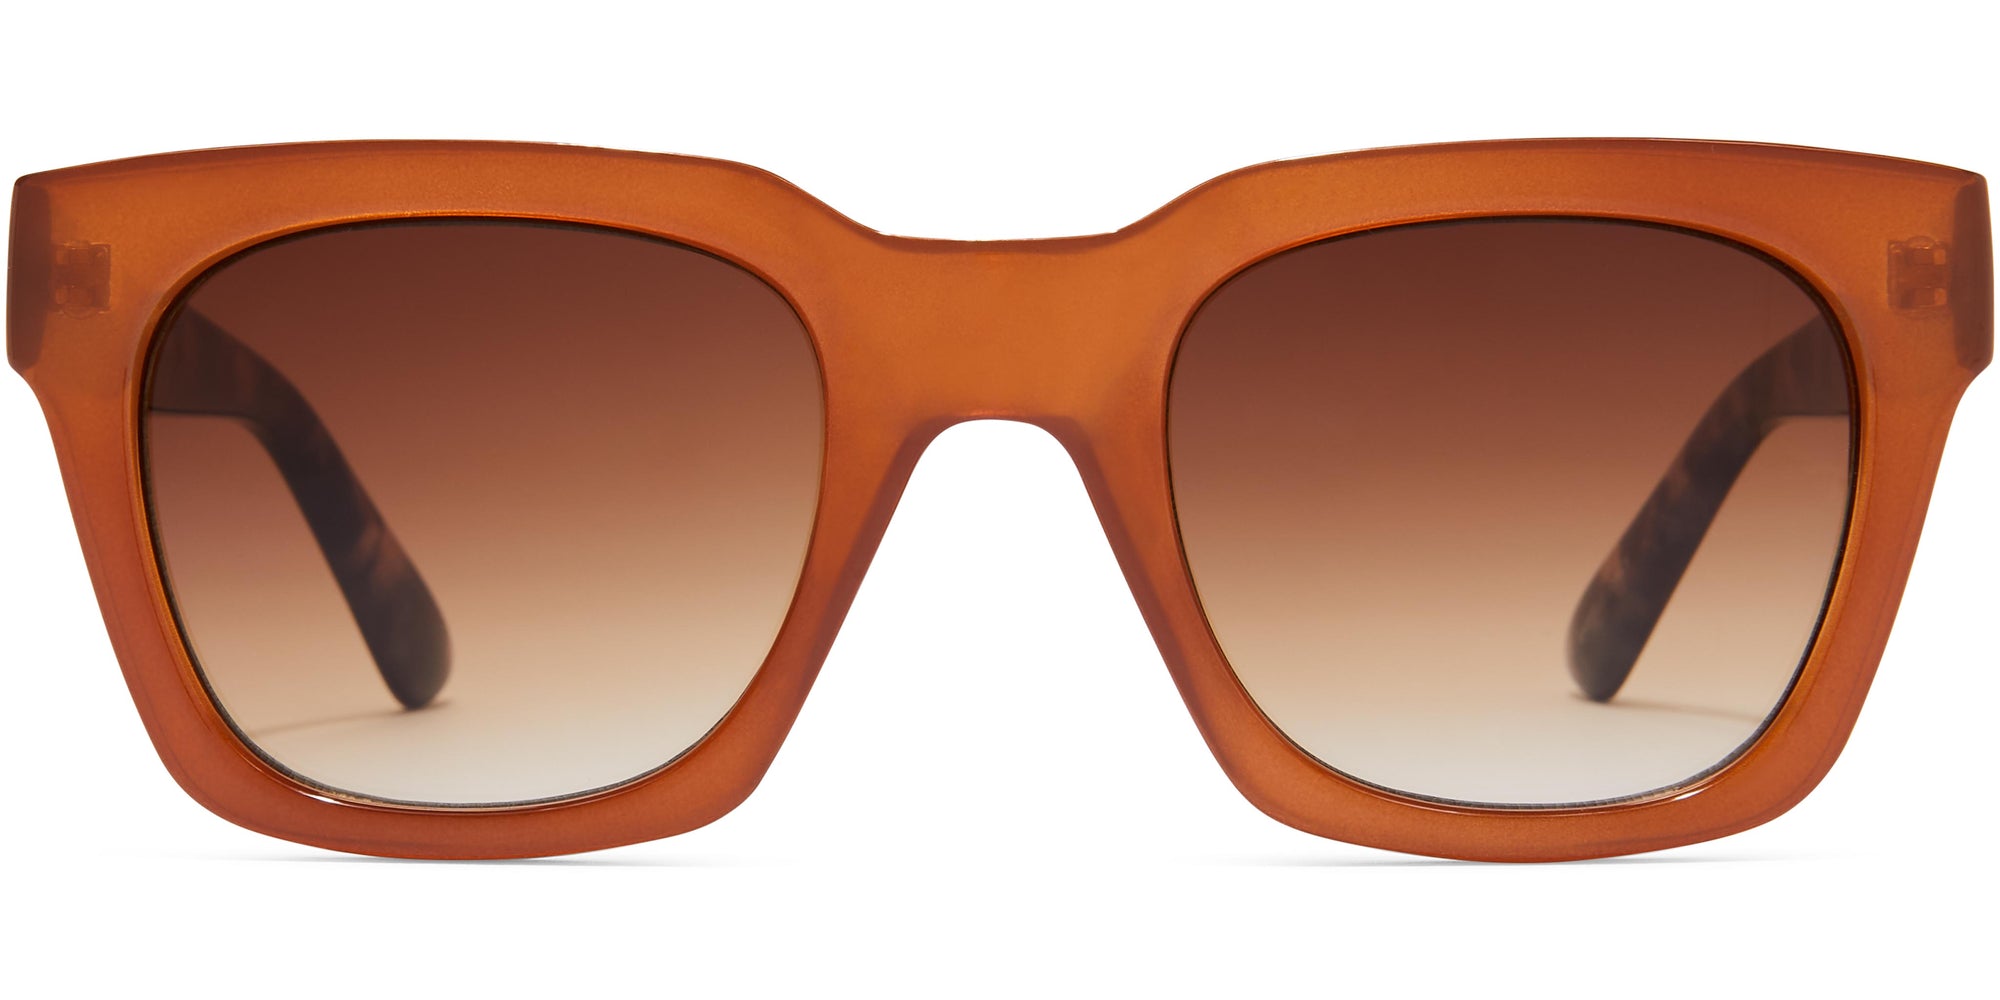 Saylor - Brown/Tortoise - Sunglasses